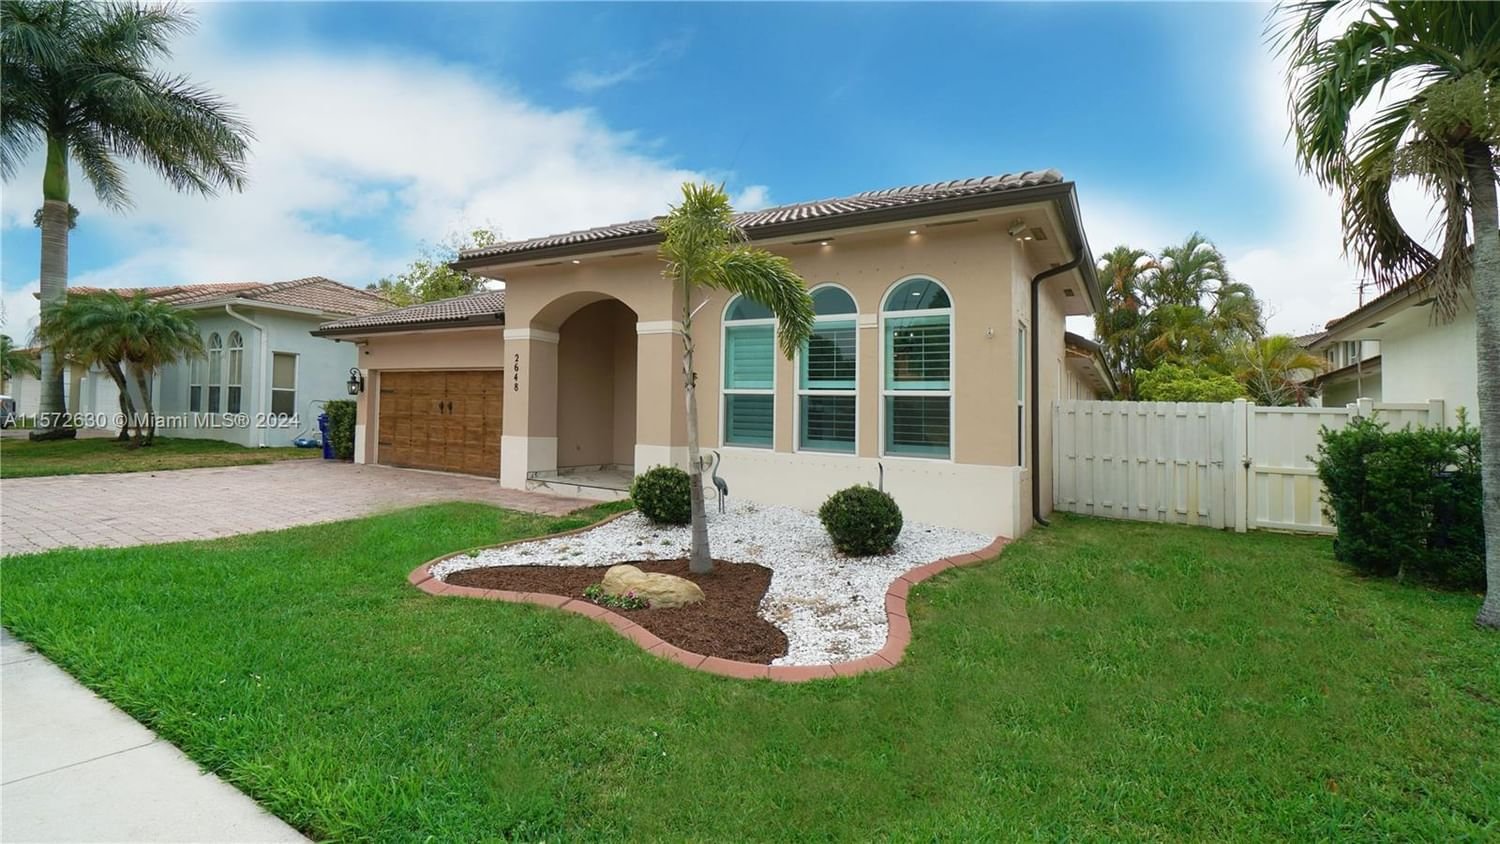 Real estate property located at 2648 137th Ave, Broward County, POD 11 AT MONARCH LAKES, Miramar, FL